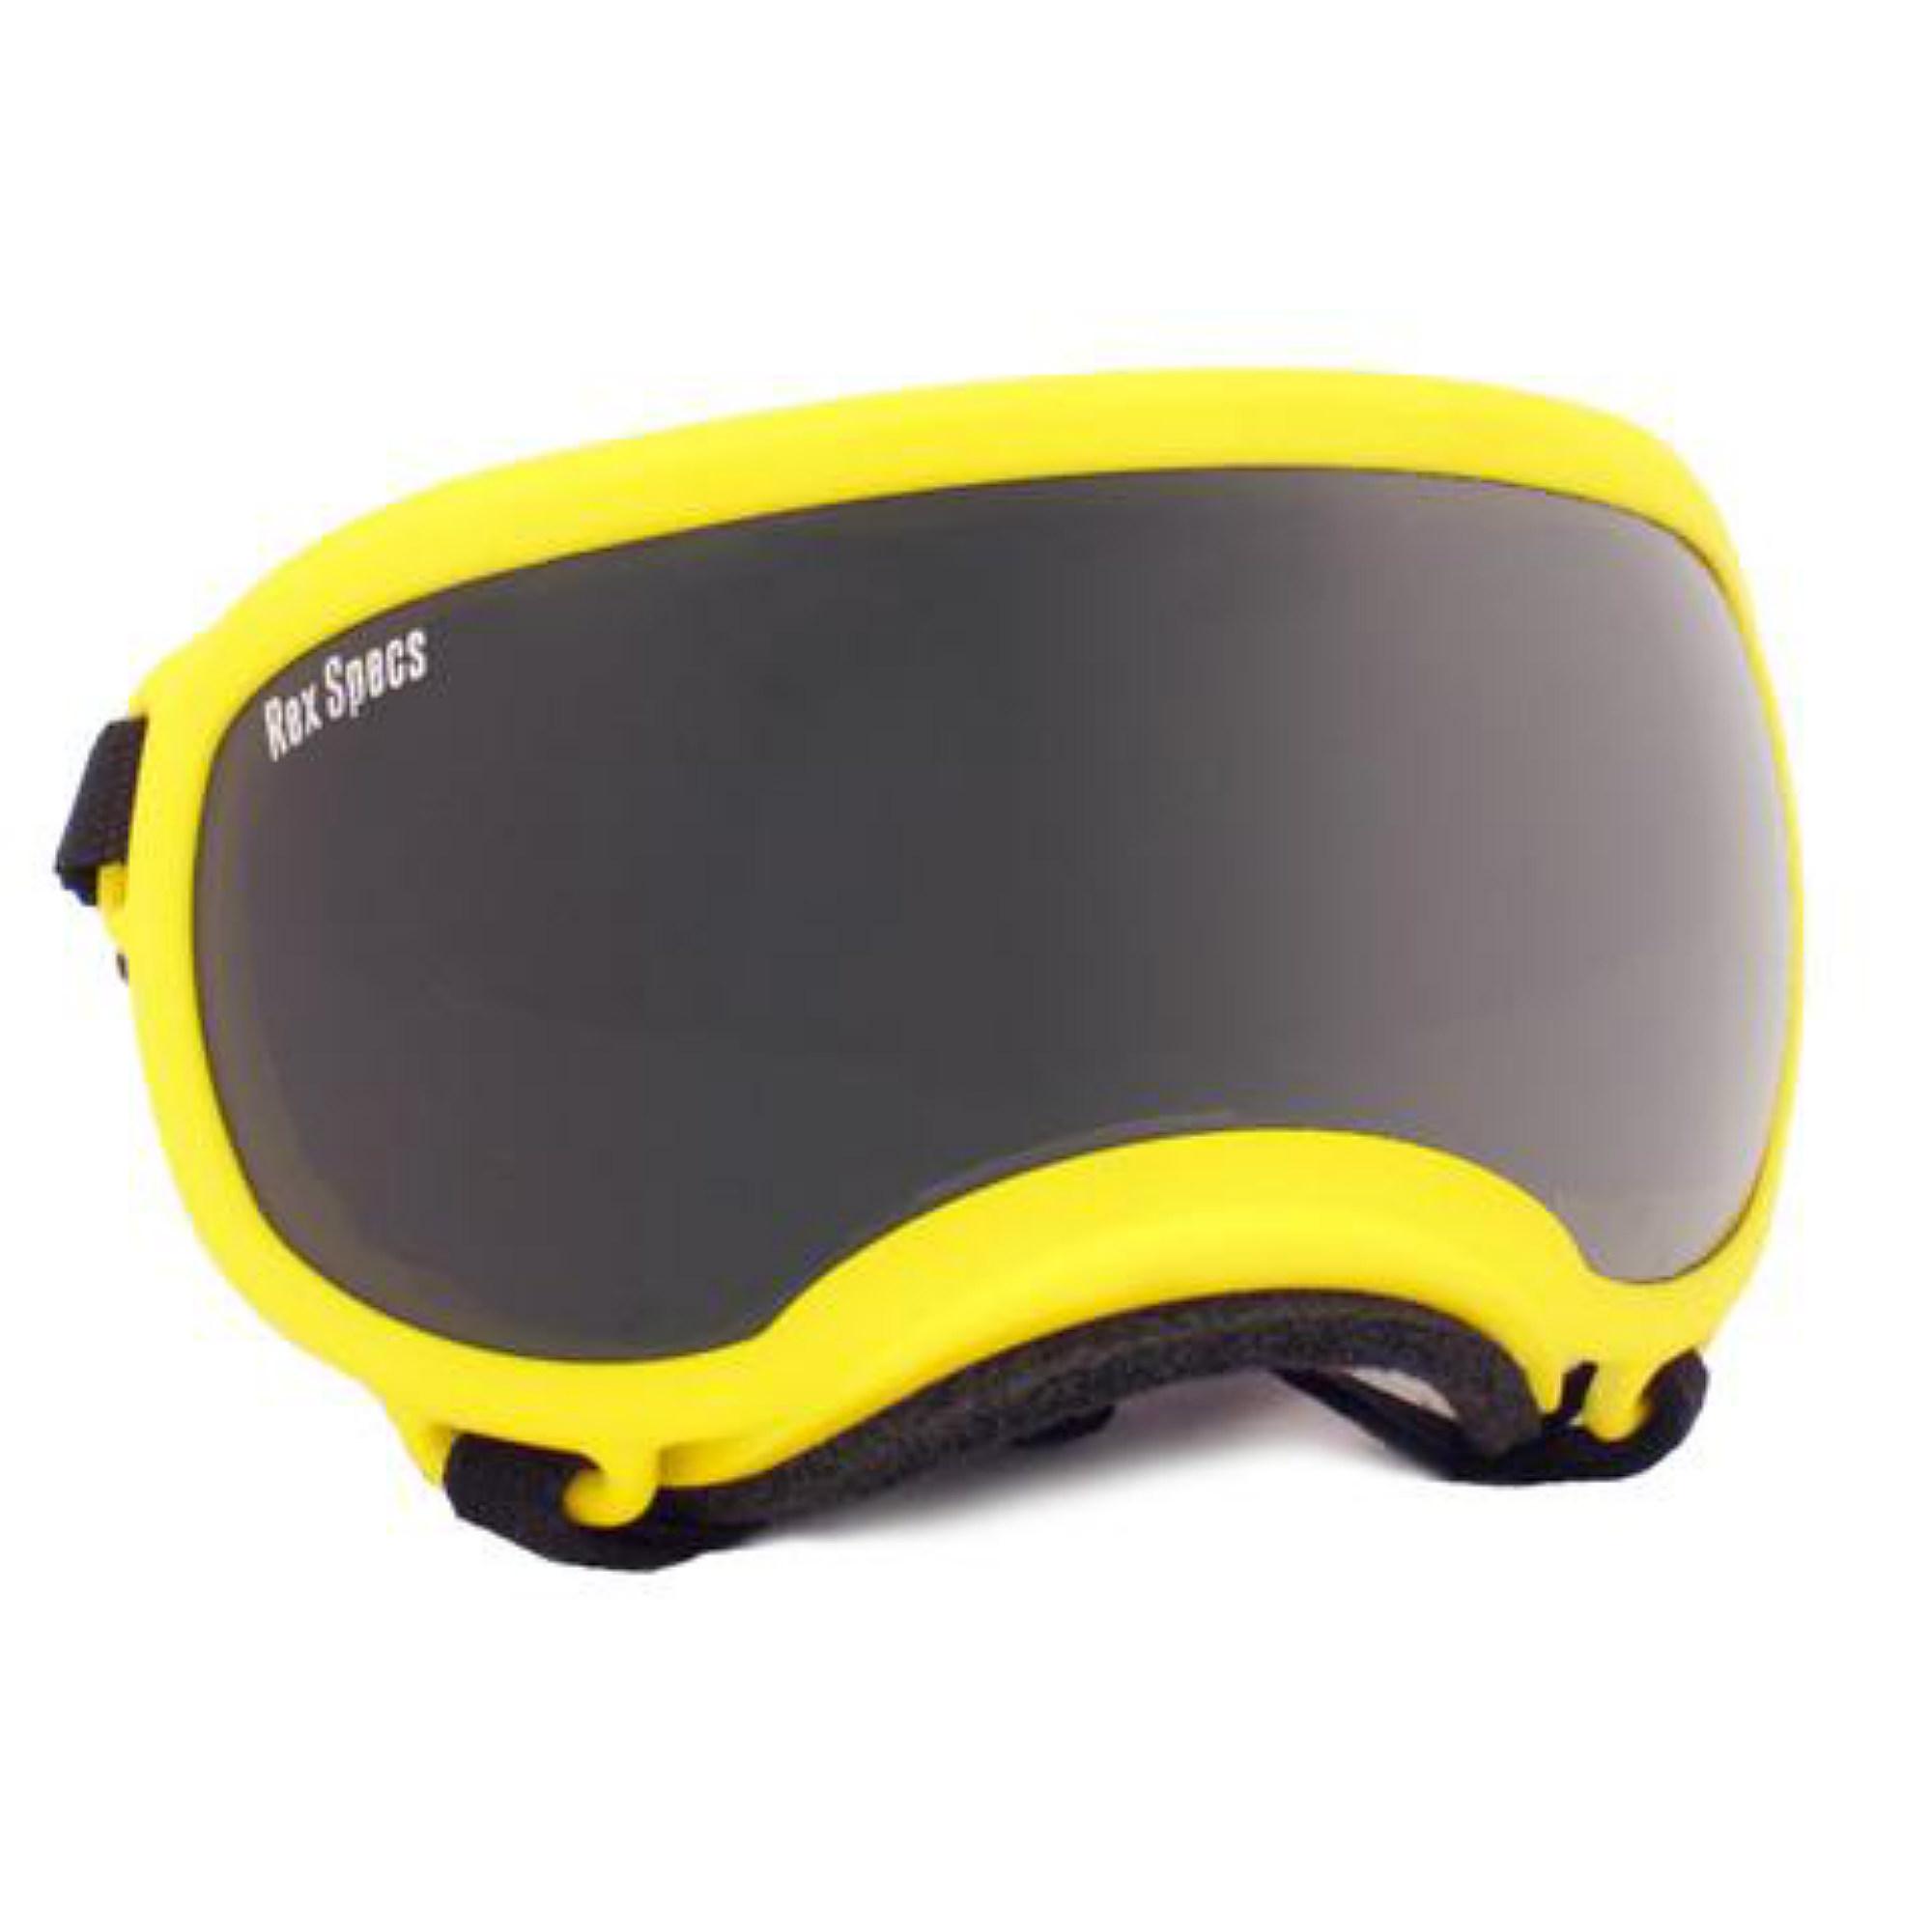 Rex Specs Dog Goggles - Yellow